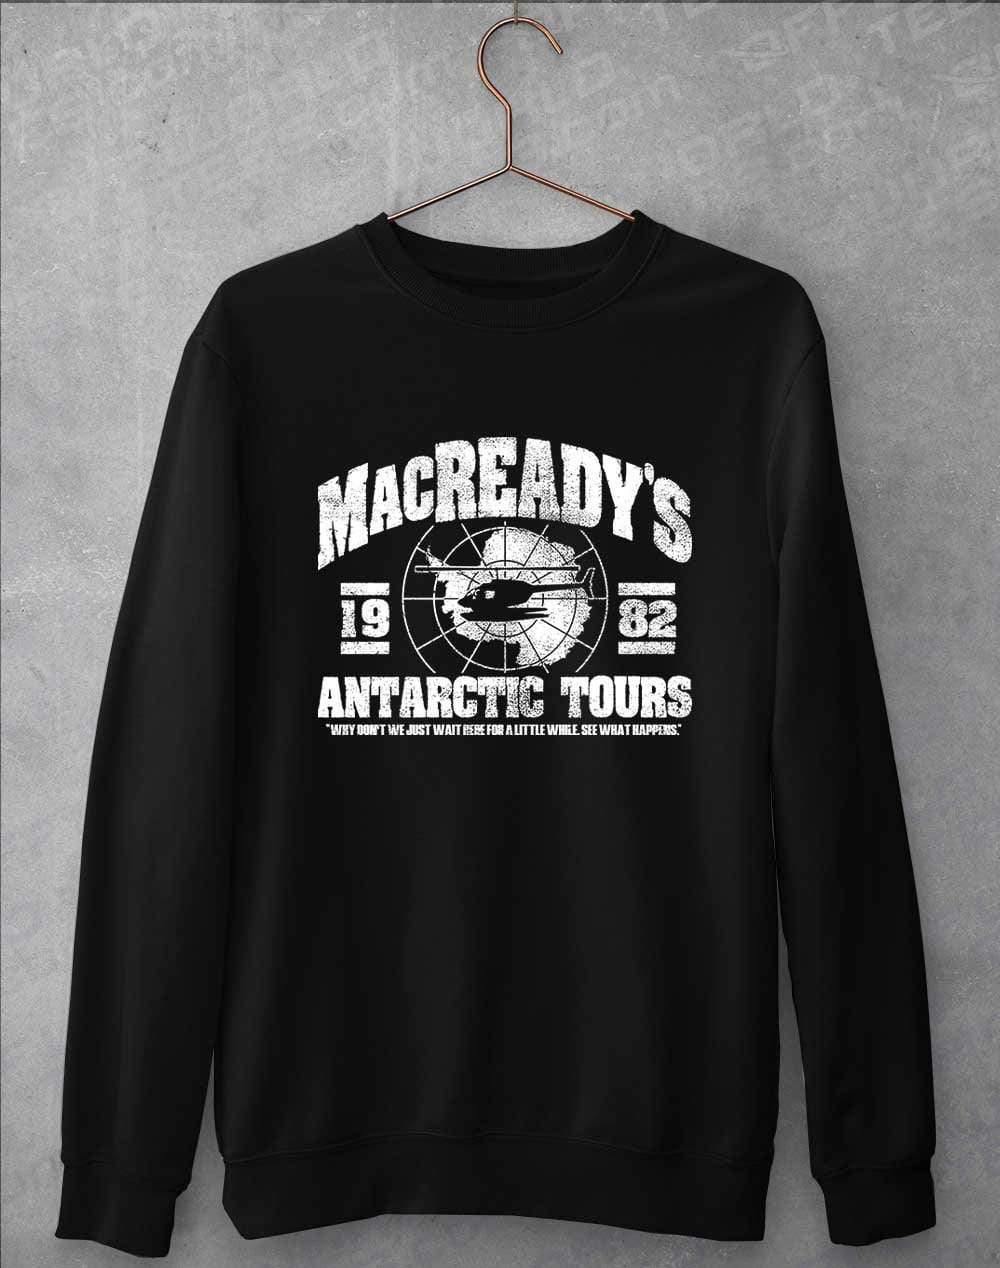 MacReady's Antarctic Tours 1982 Sweatshirt S / Jet Black  - Off World Tees